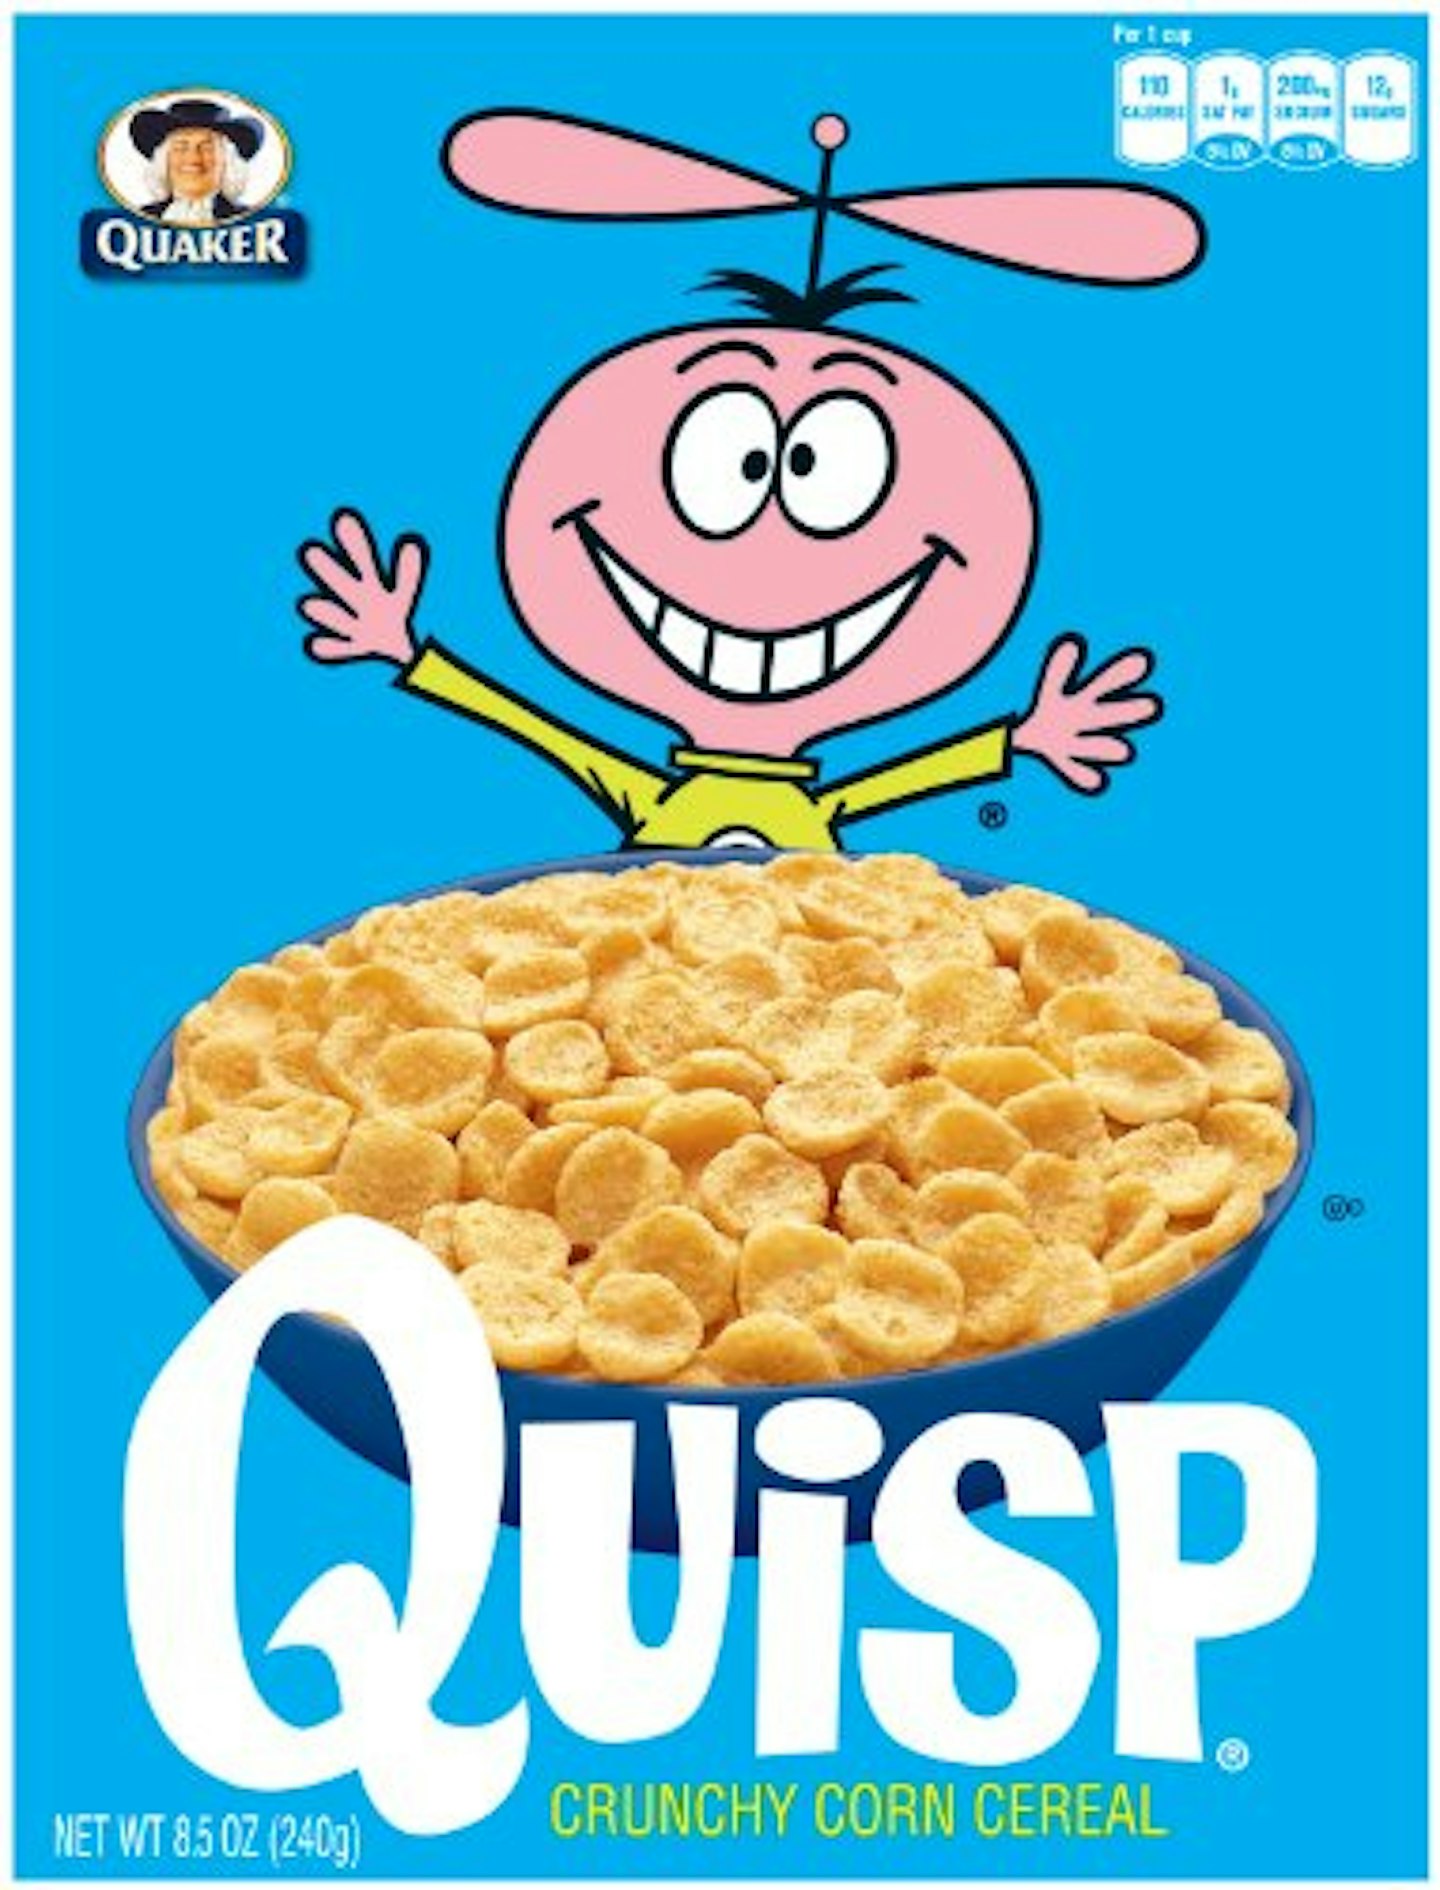 Discontinued cereals Quisp